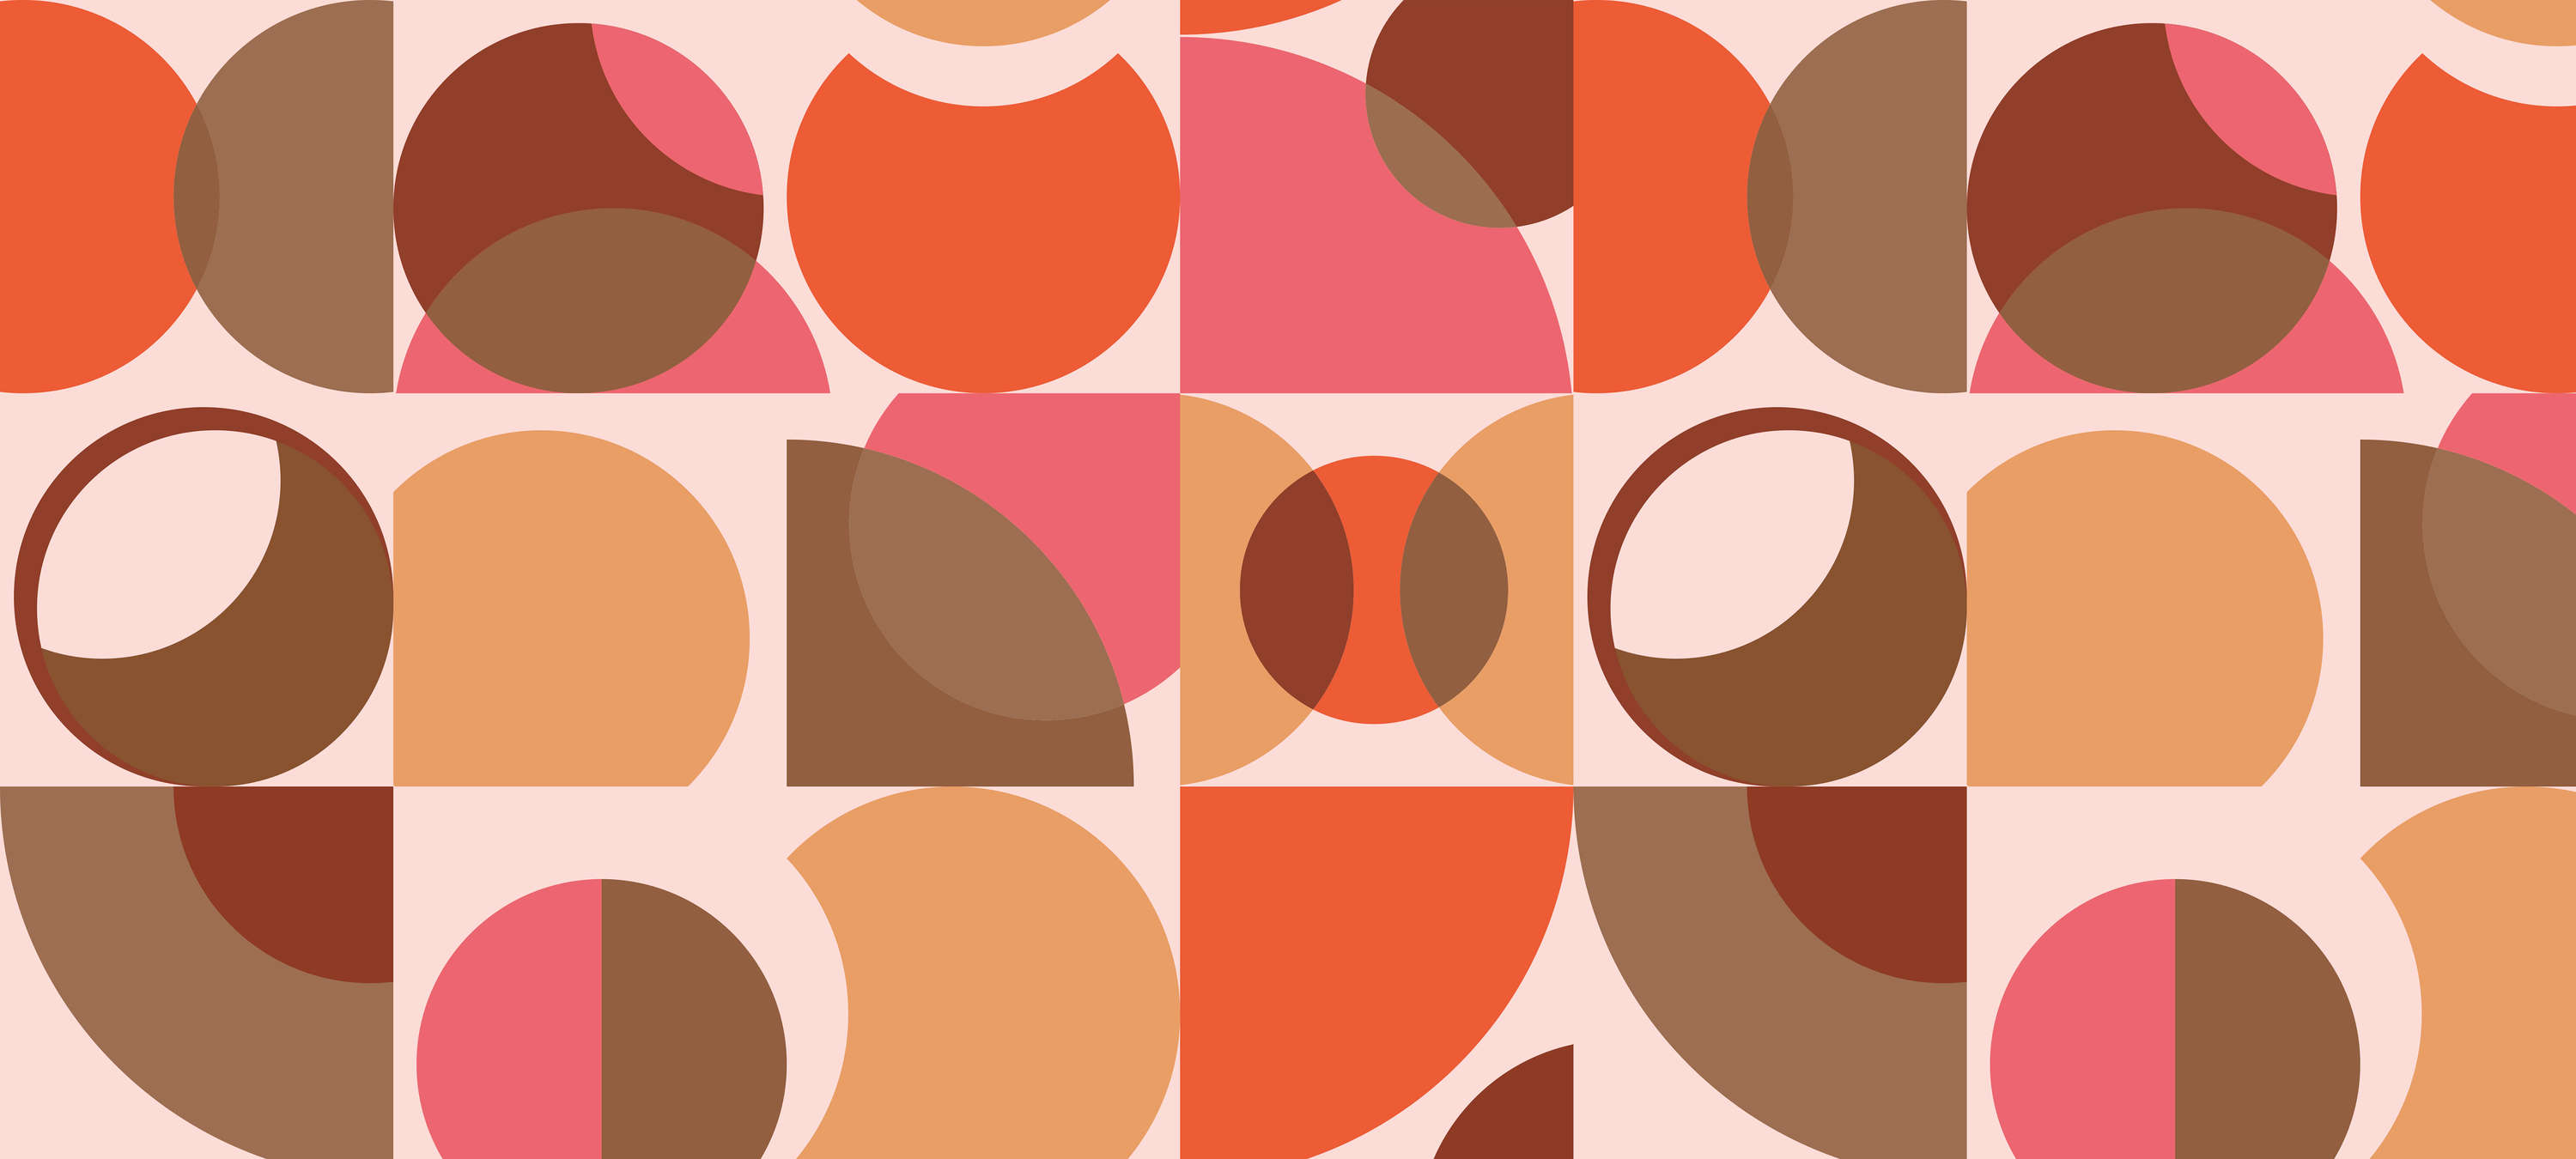             Papel pintado retro naranja con diseño geométrico - marrón, rosa, naranja
        